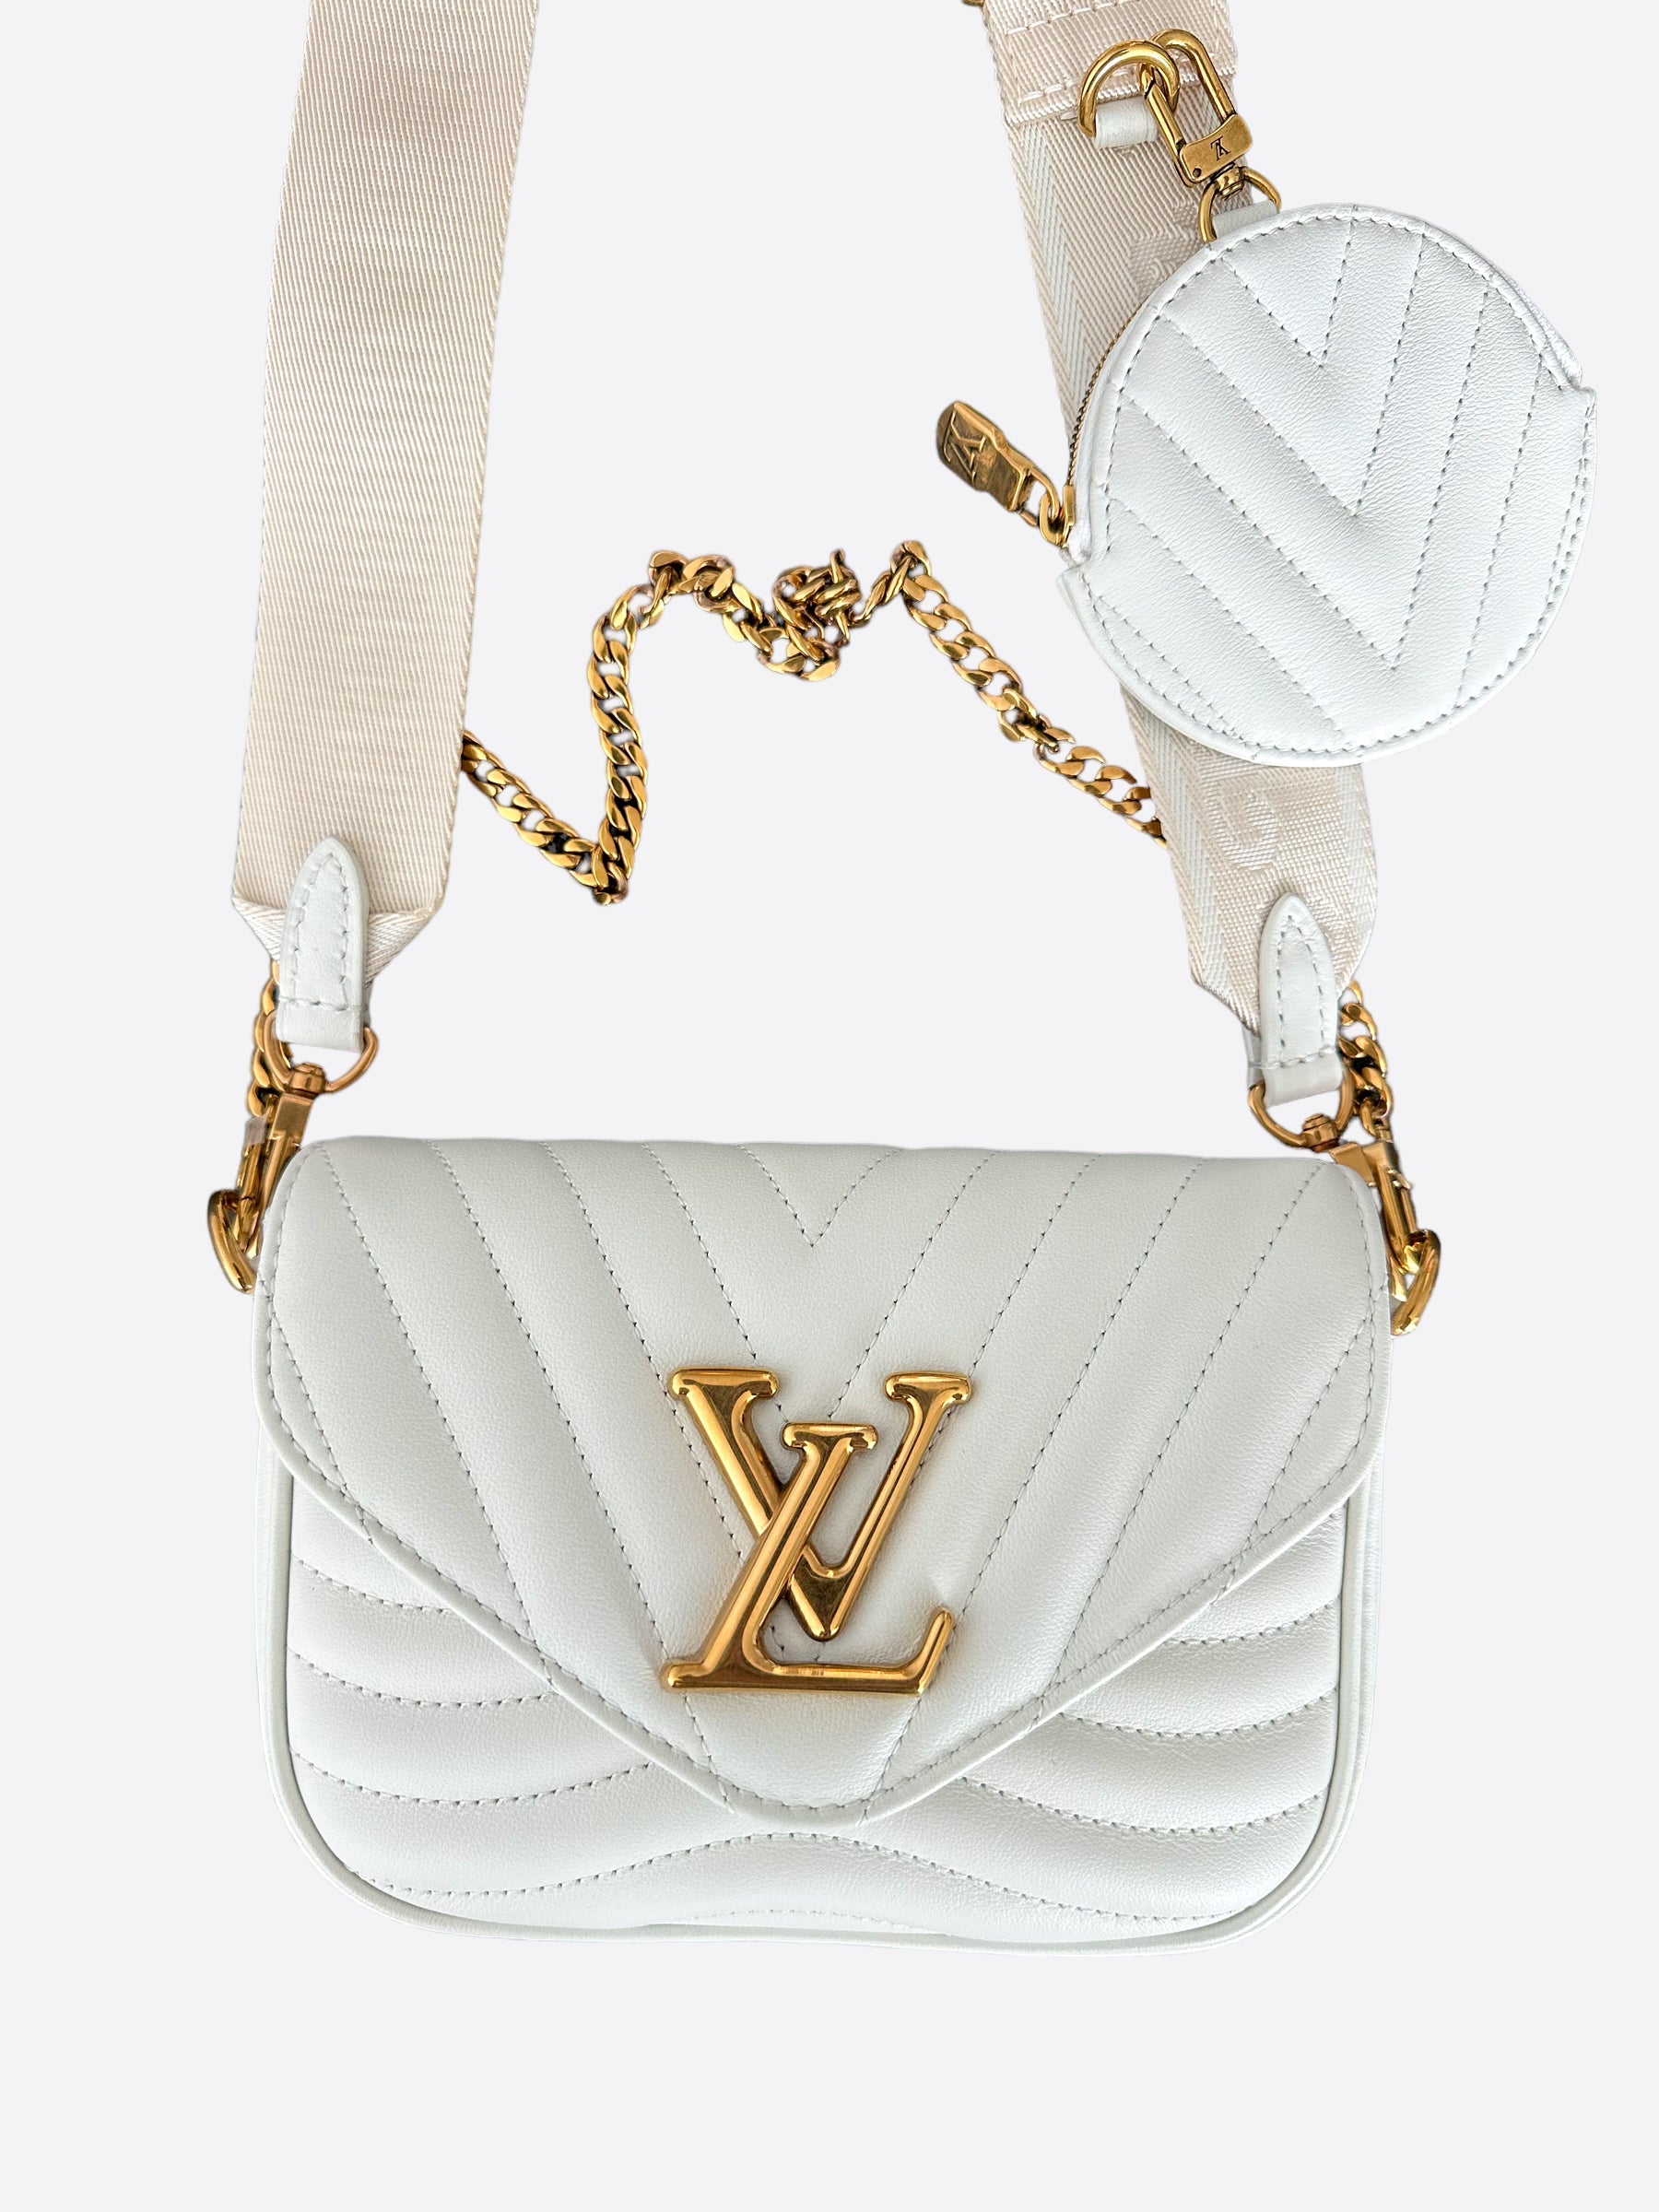 Louis Vuitton New Wave Multi Pochette